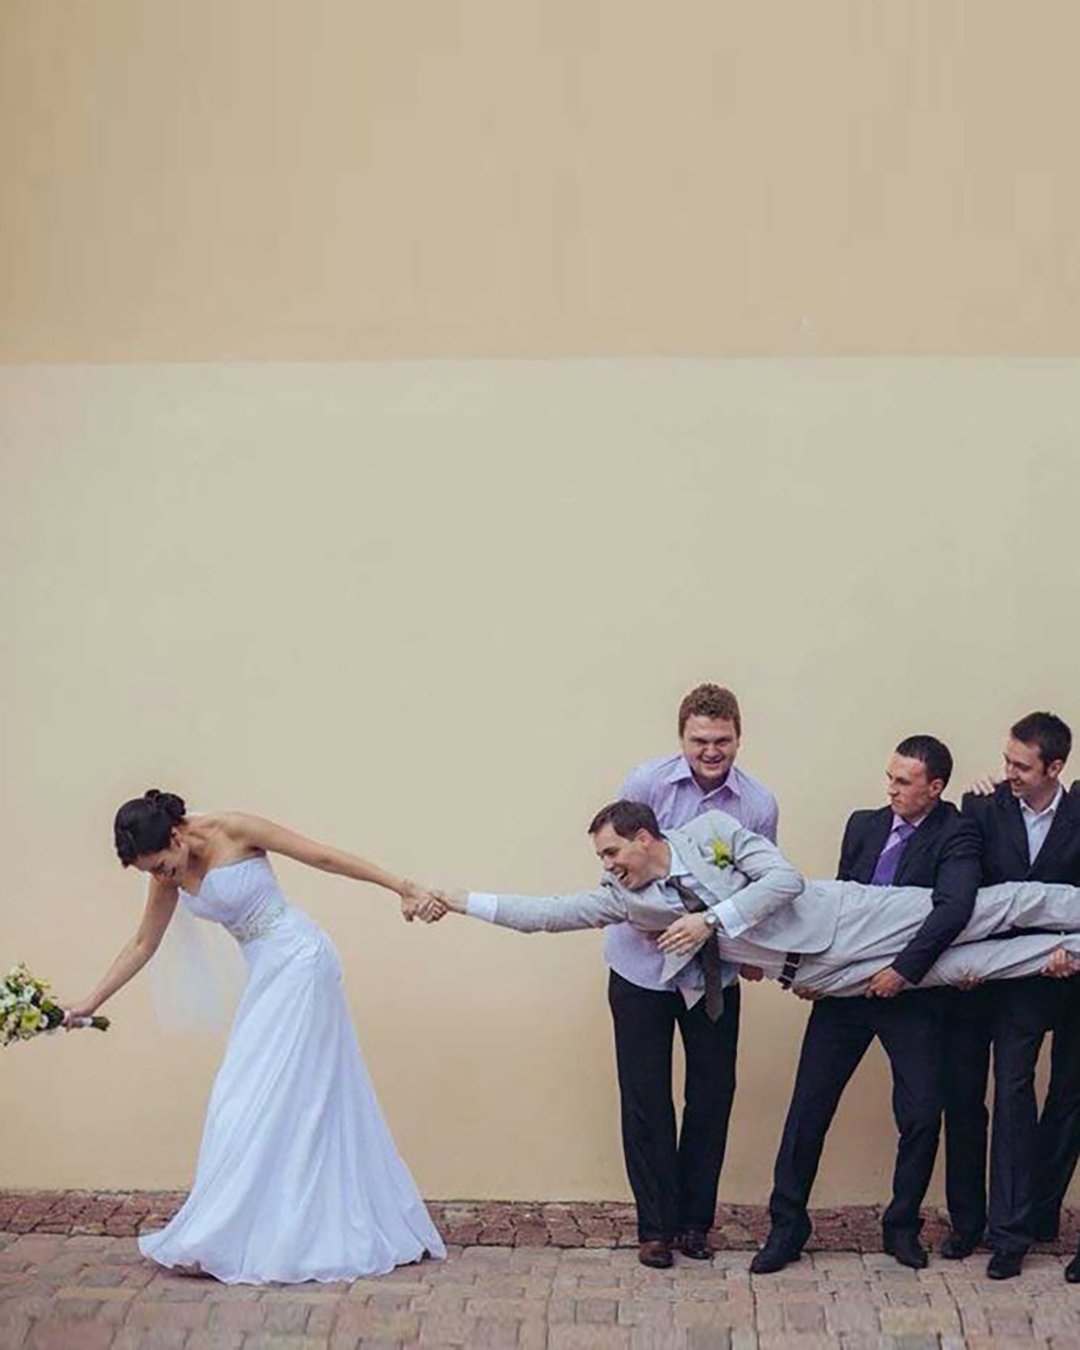 hilarious clever wedding photos bride pulls the groom from groomsmen creativa wedding photography